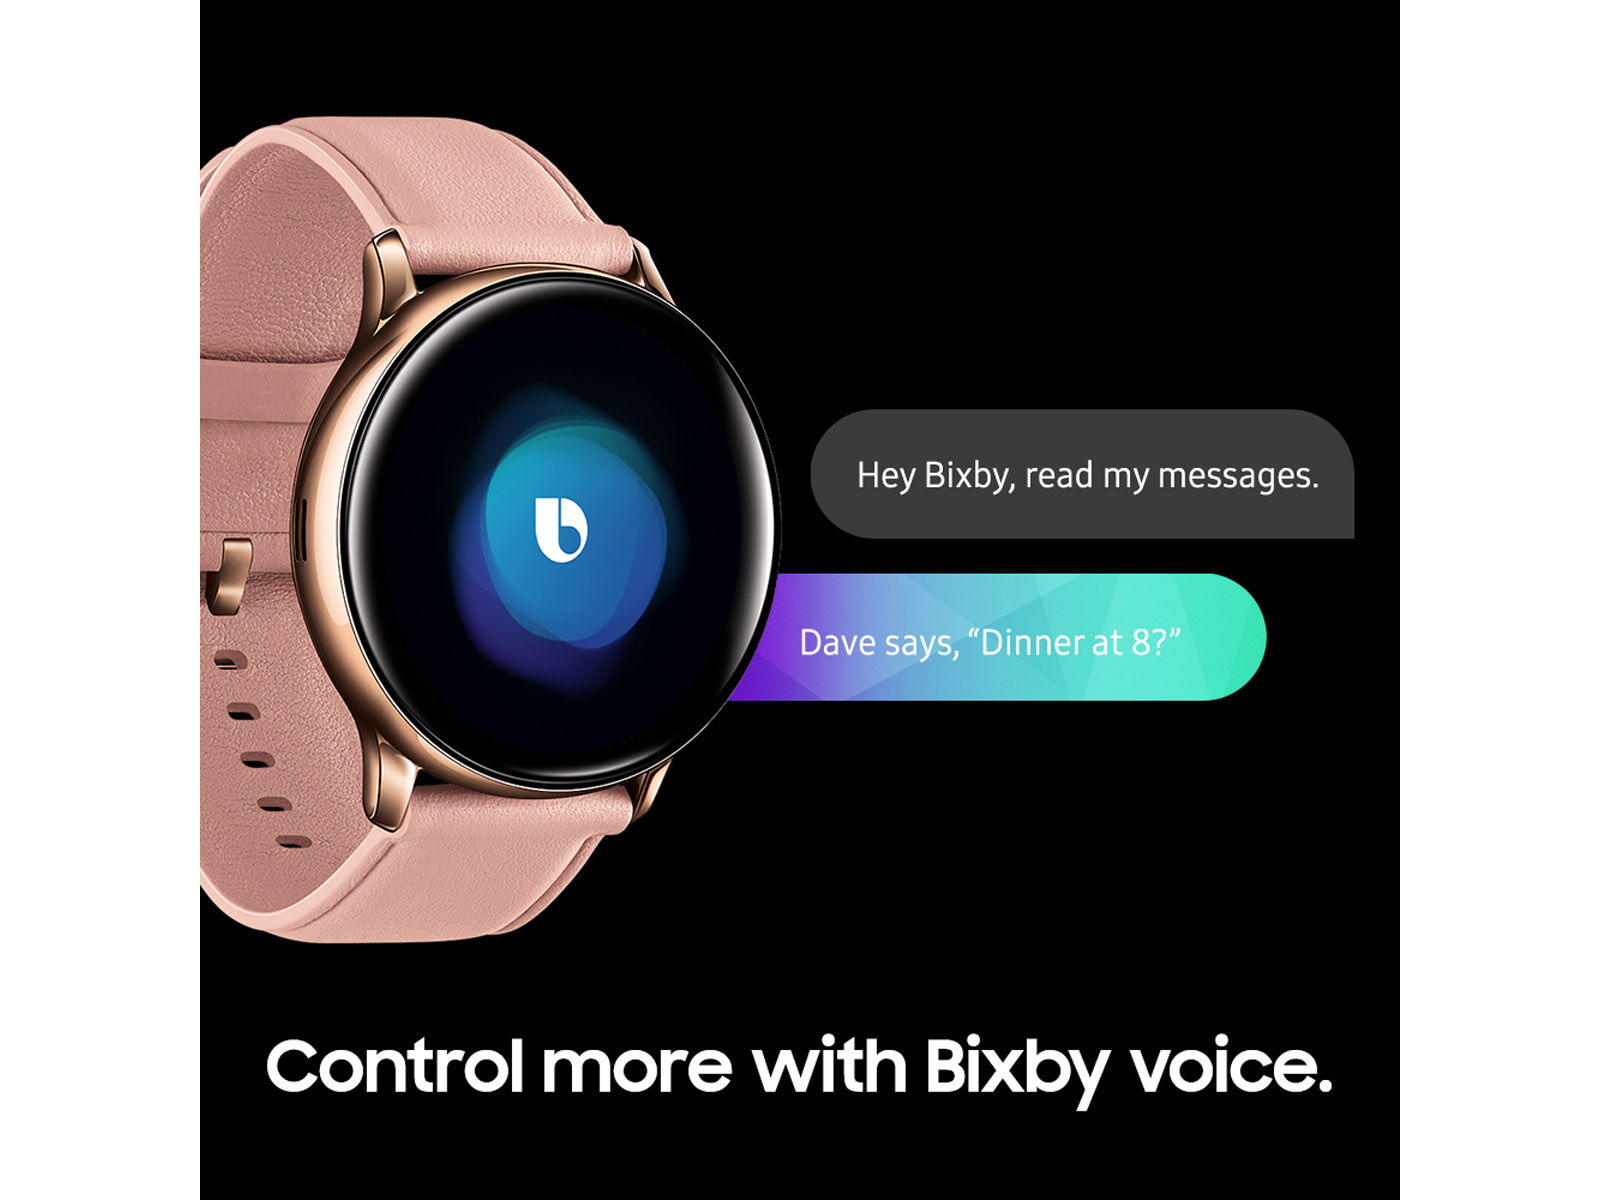 Thumbnail image of Galaxy Watch Active2 (44mm), Aqua Black (Bluetooth)